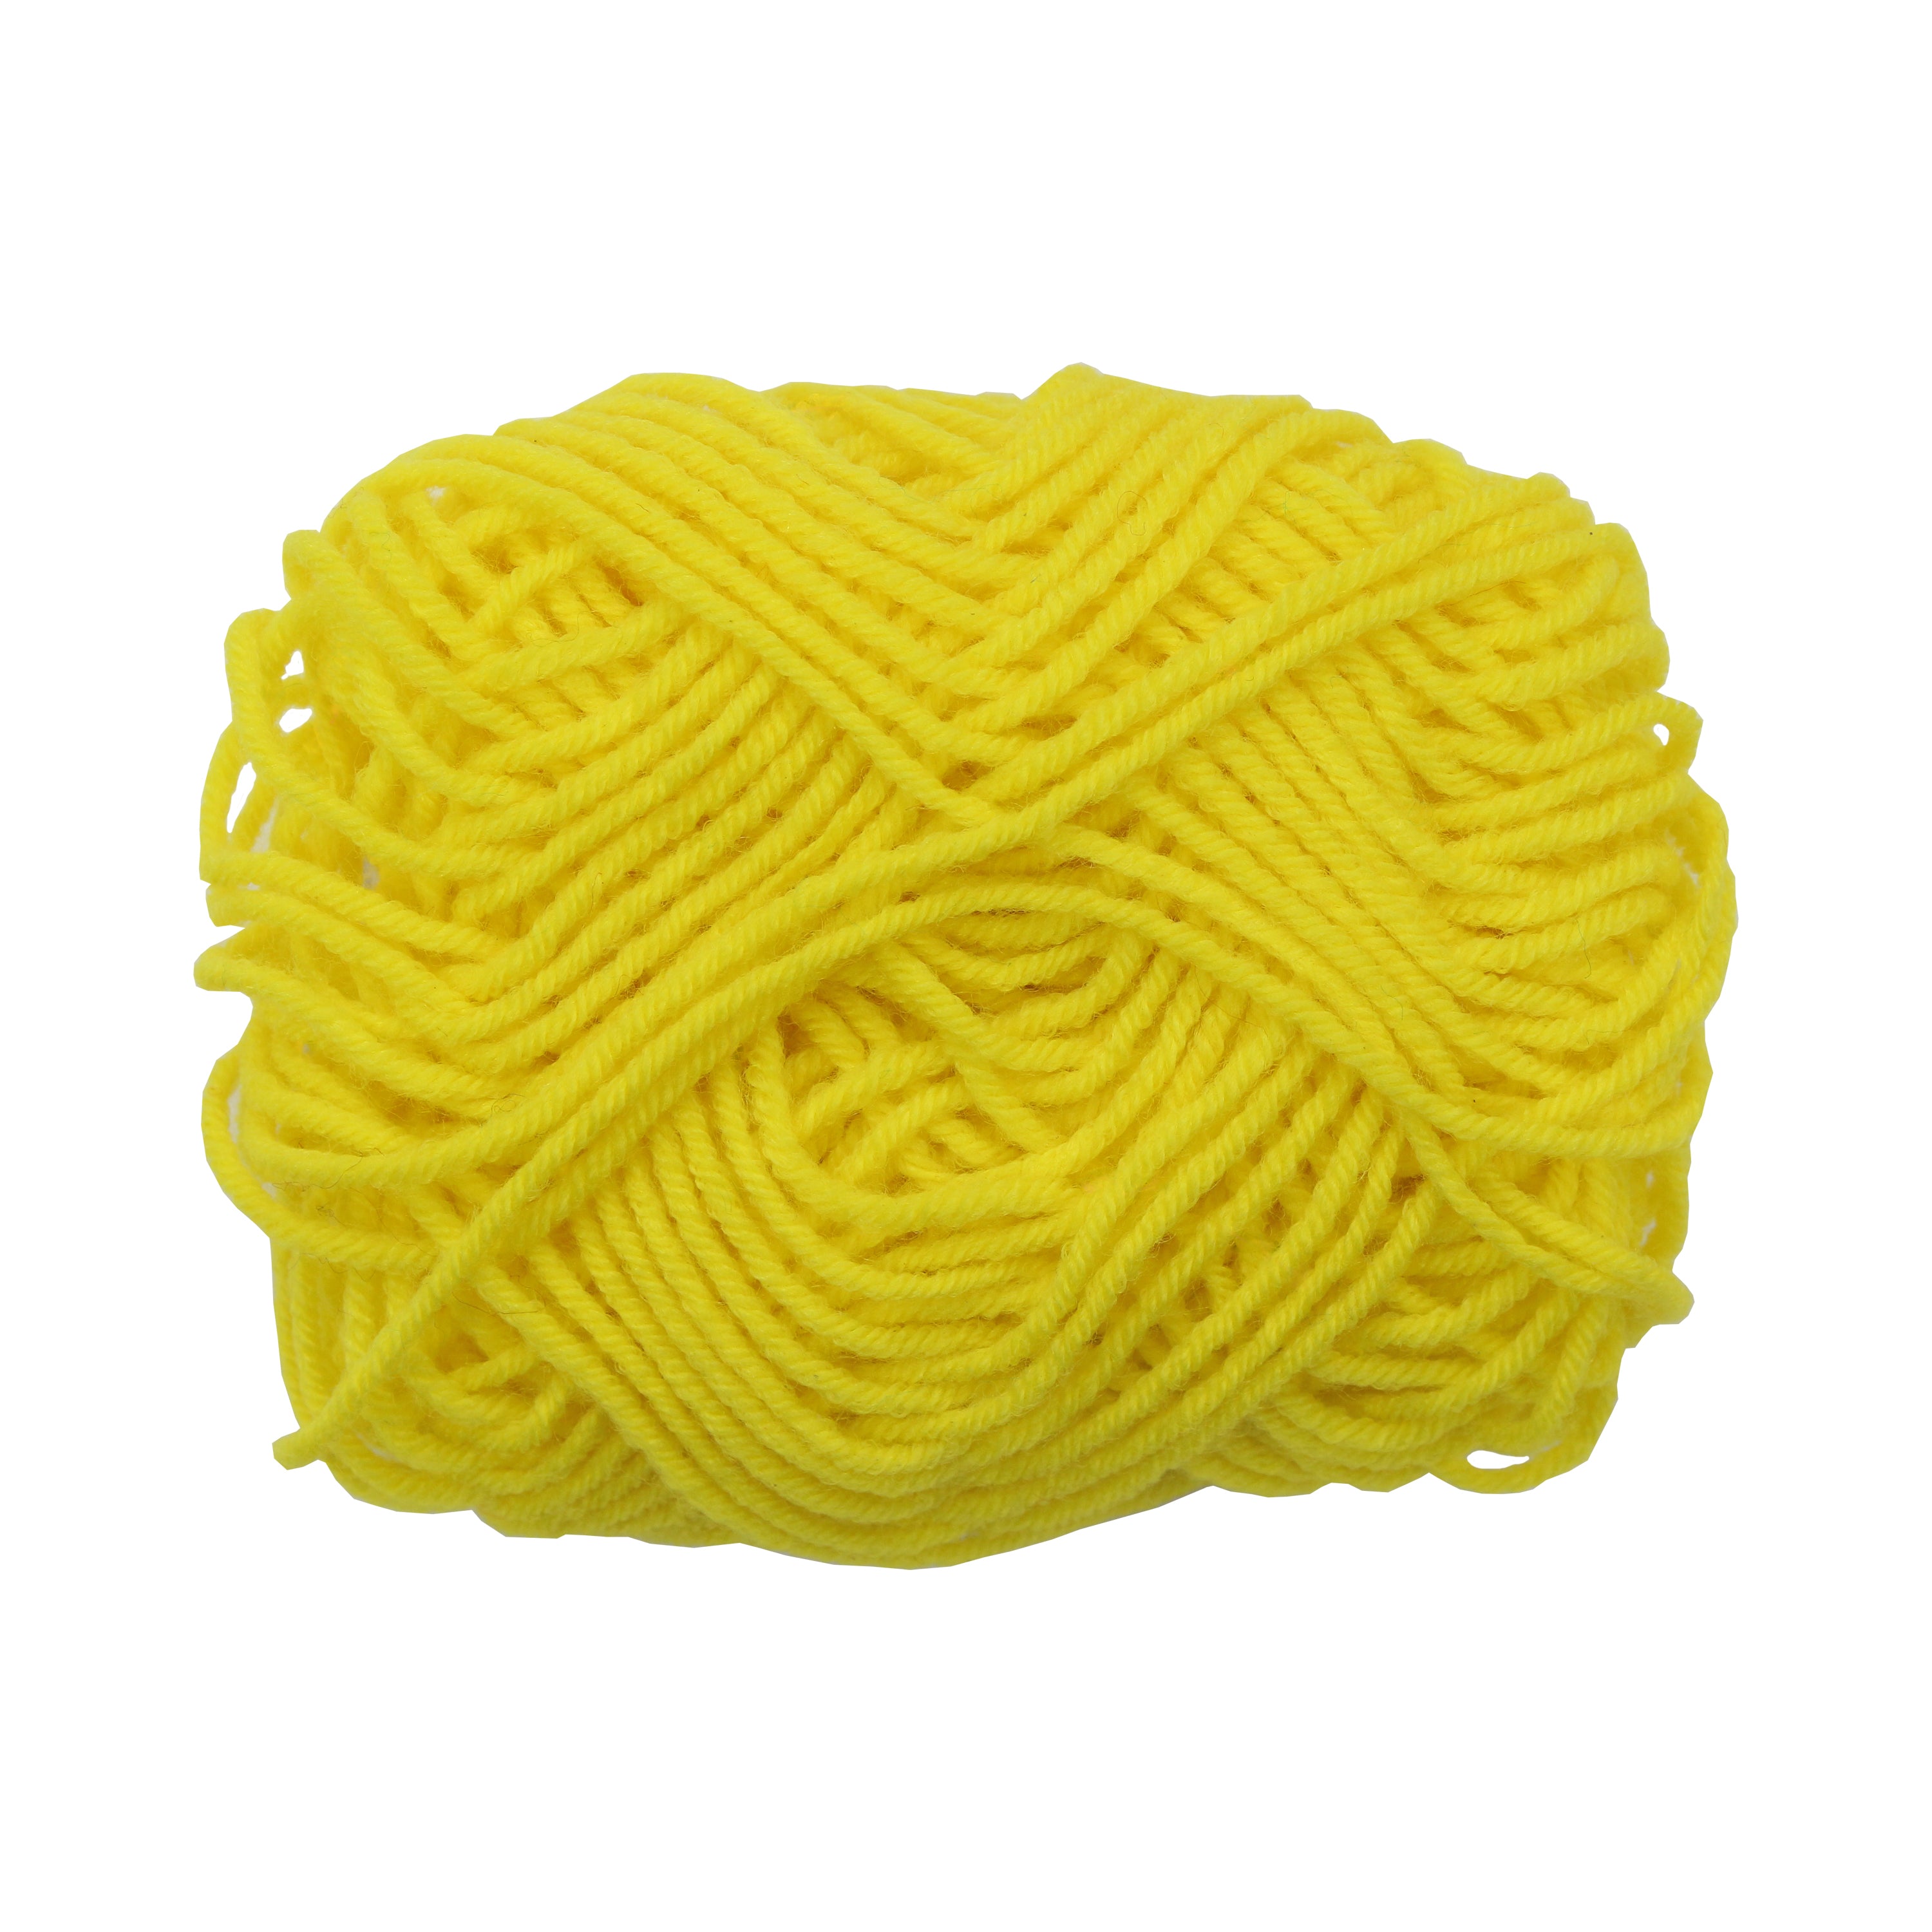 Crochet Hooks For Wool Work 4mm 1pc – Itsy Bitsy